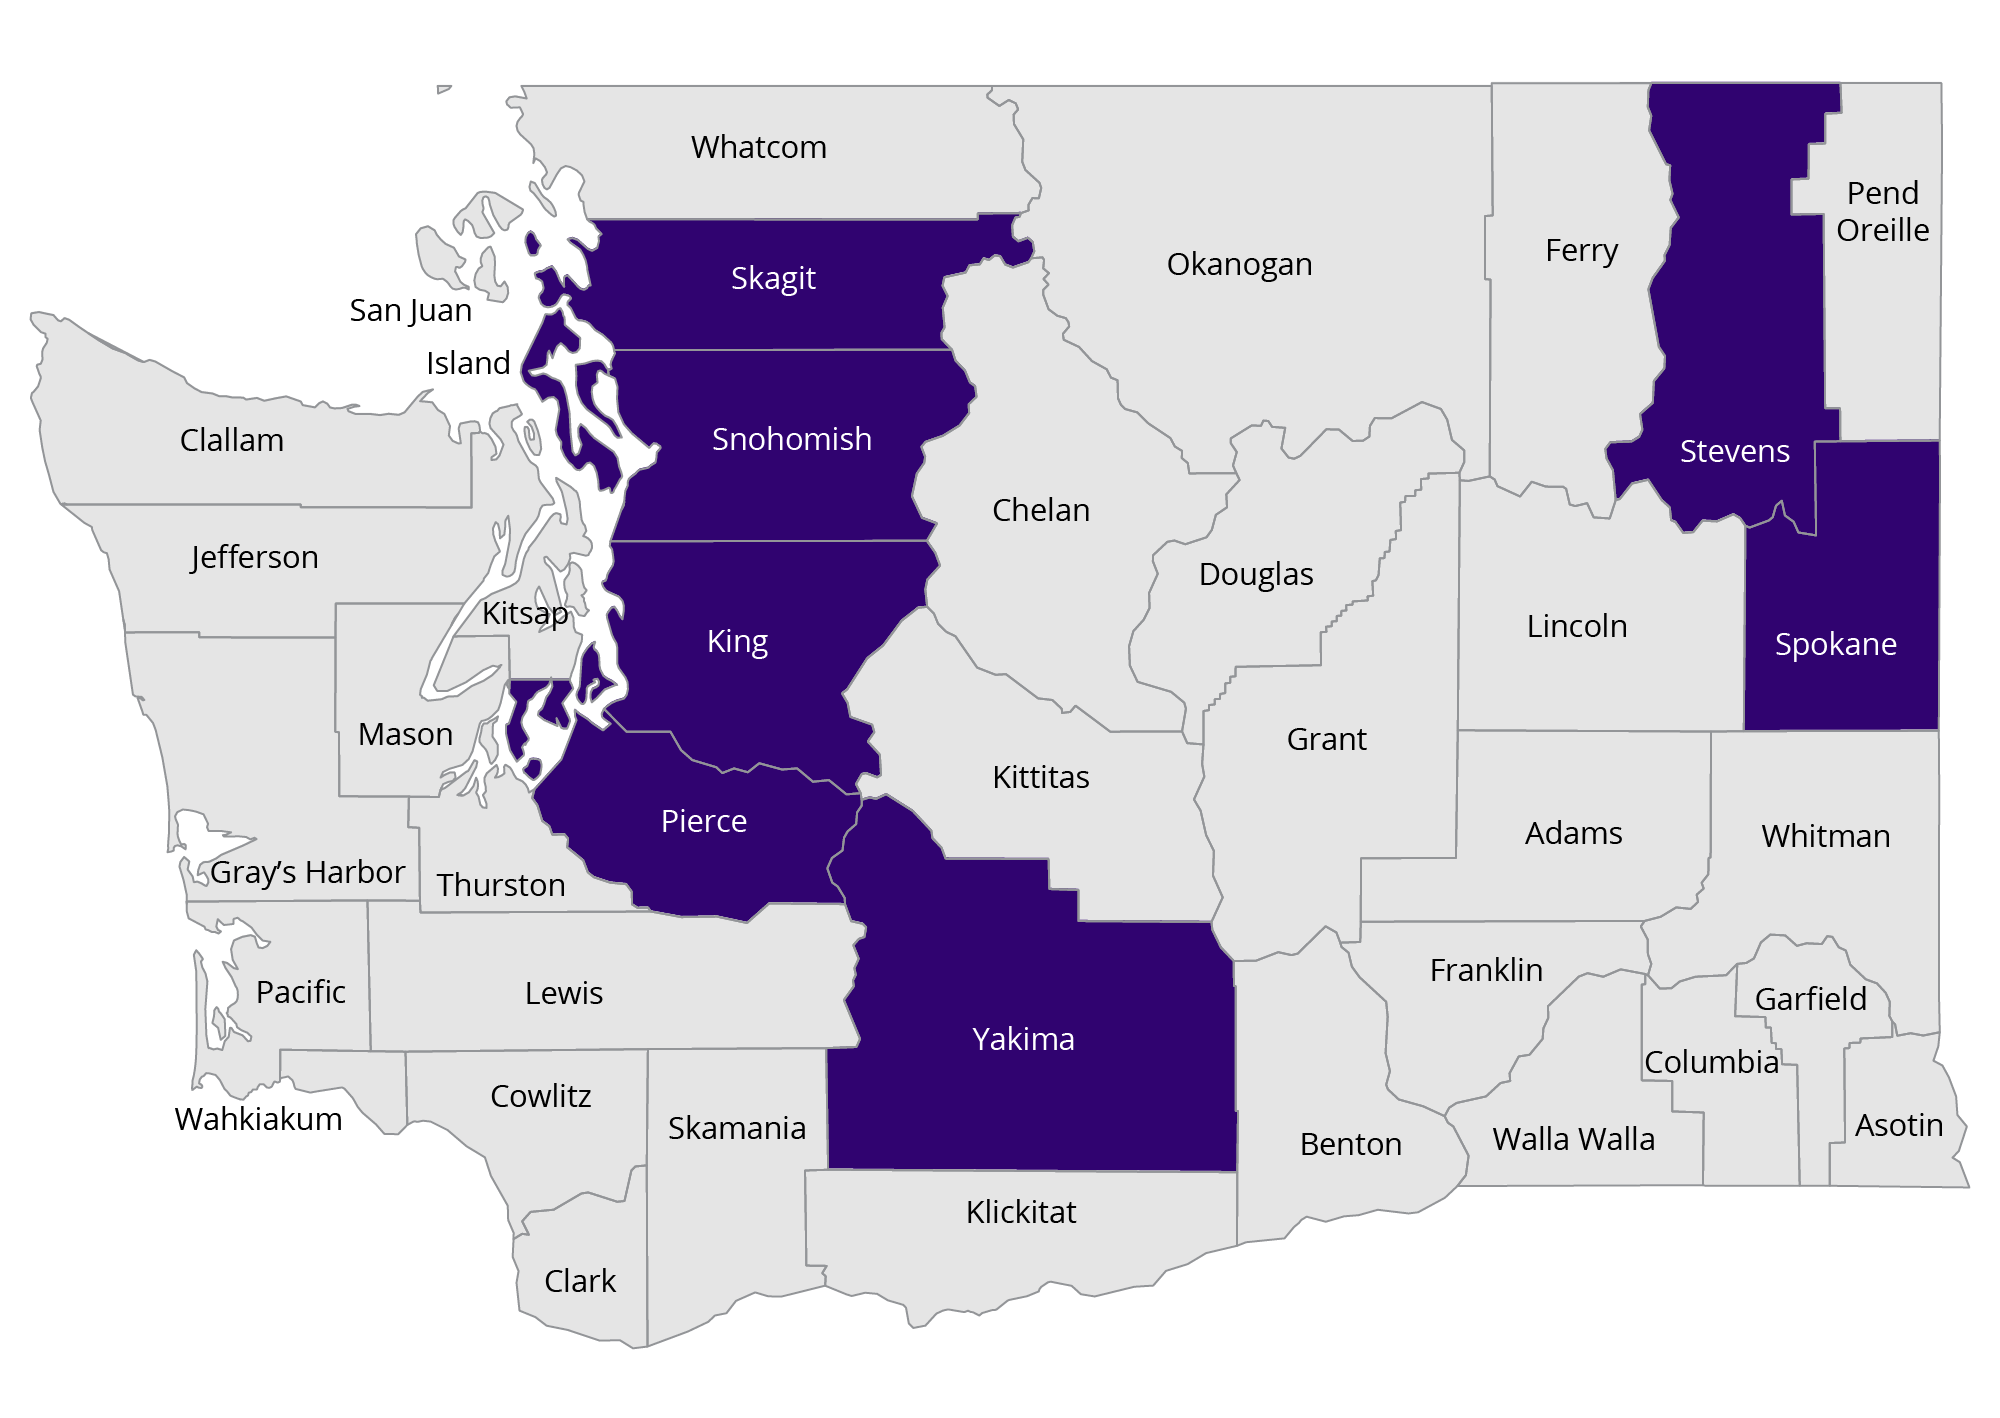 The Pediatric Environmental Health Specialty Unit works in the following Washington counties: Island, King, Pierce, Skagit, Snohomish, Spokane, Stevens, and Yakima.